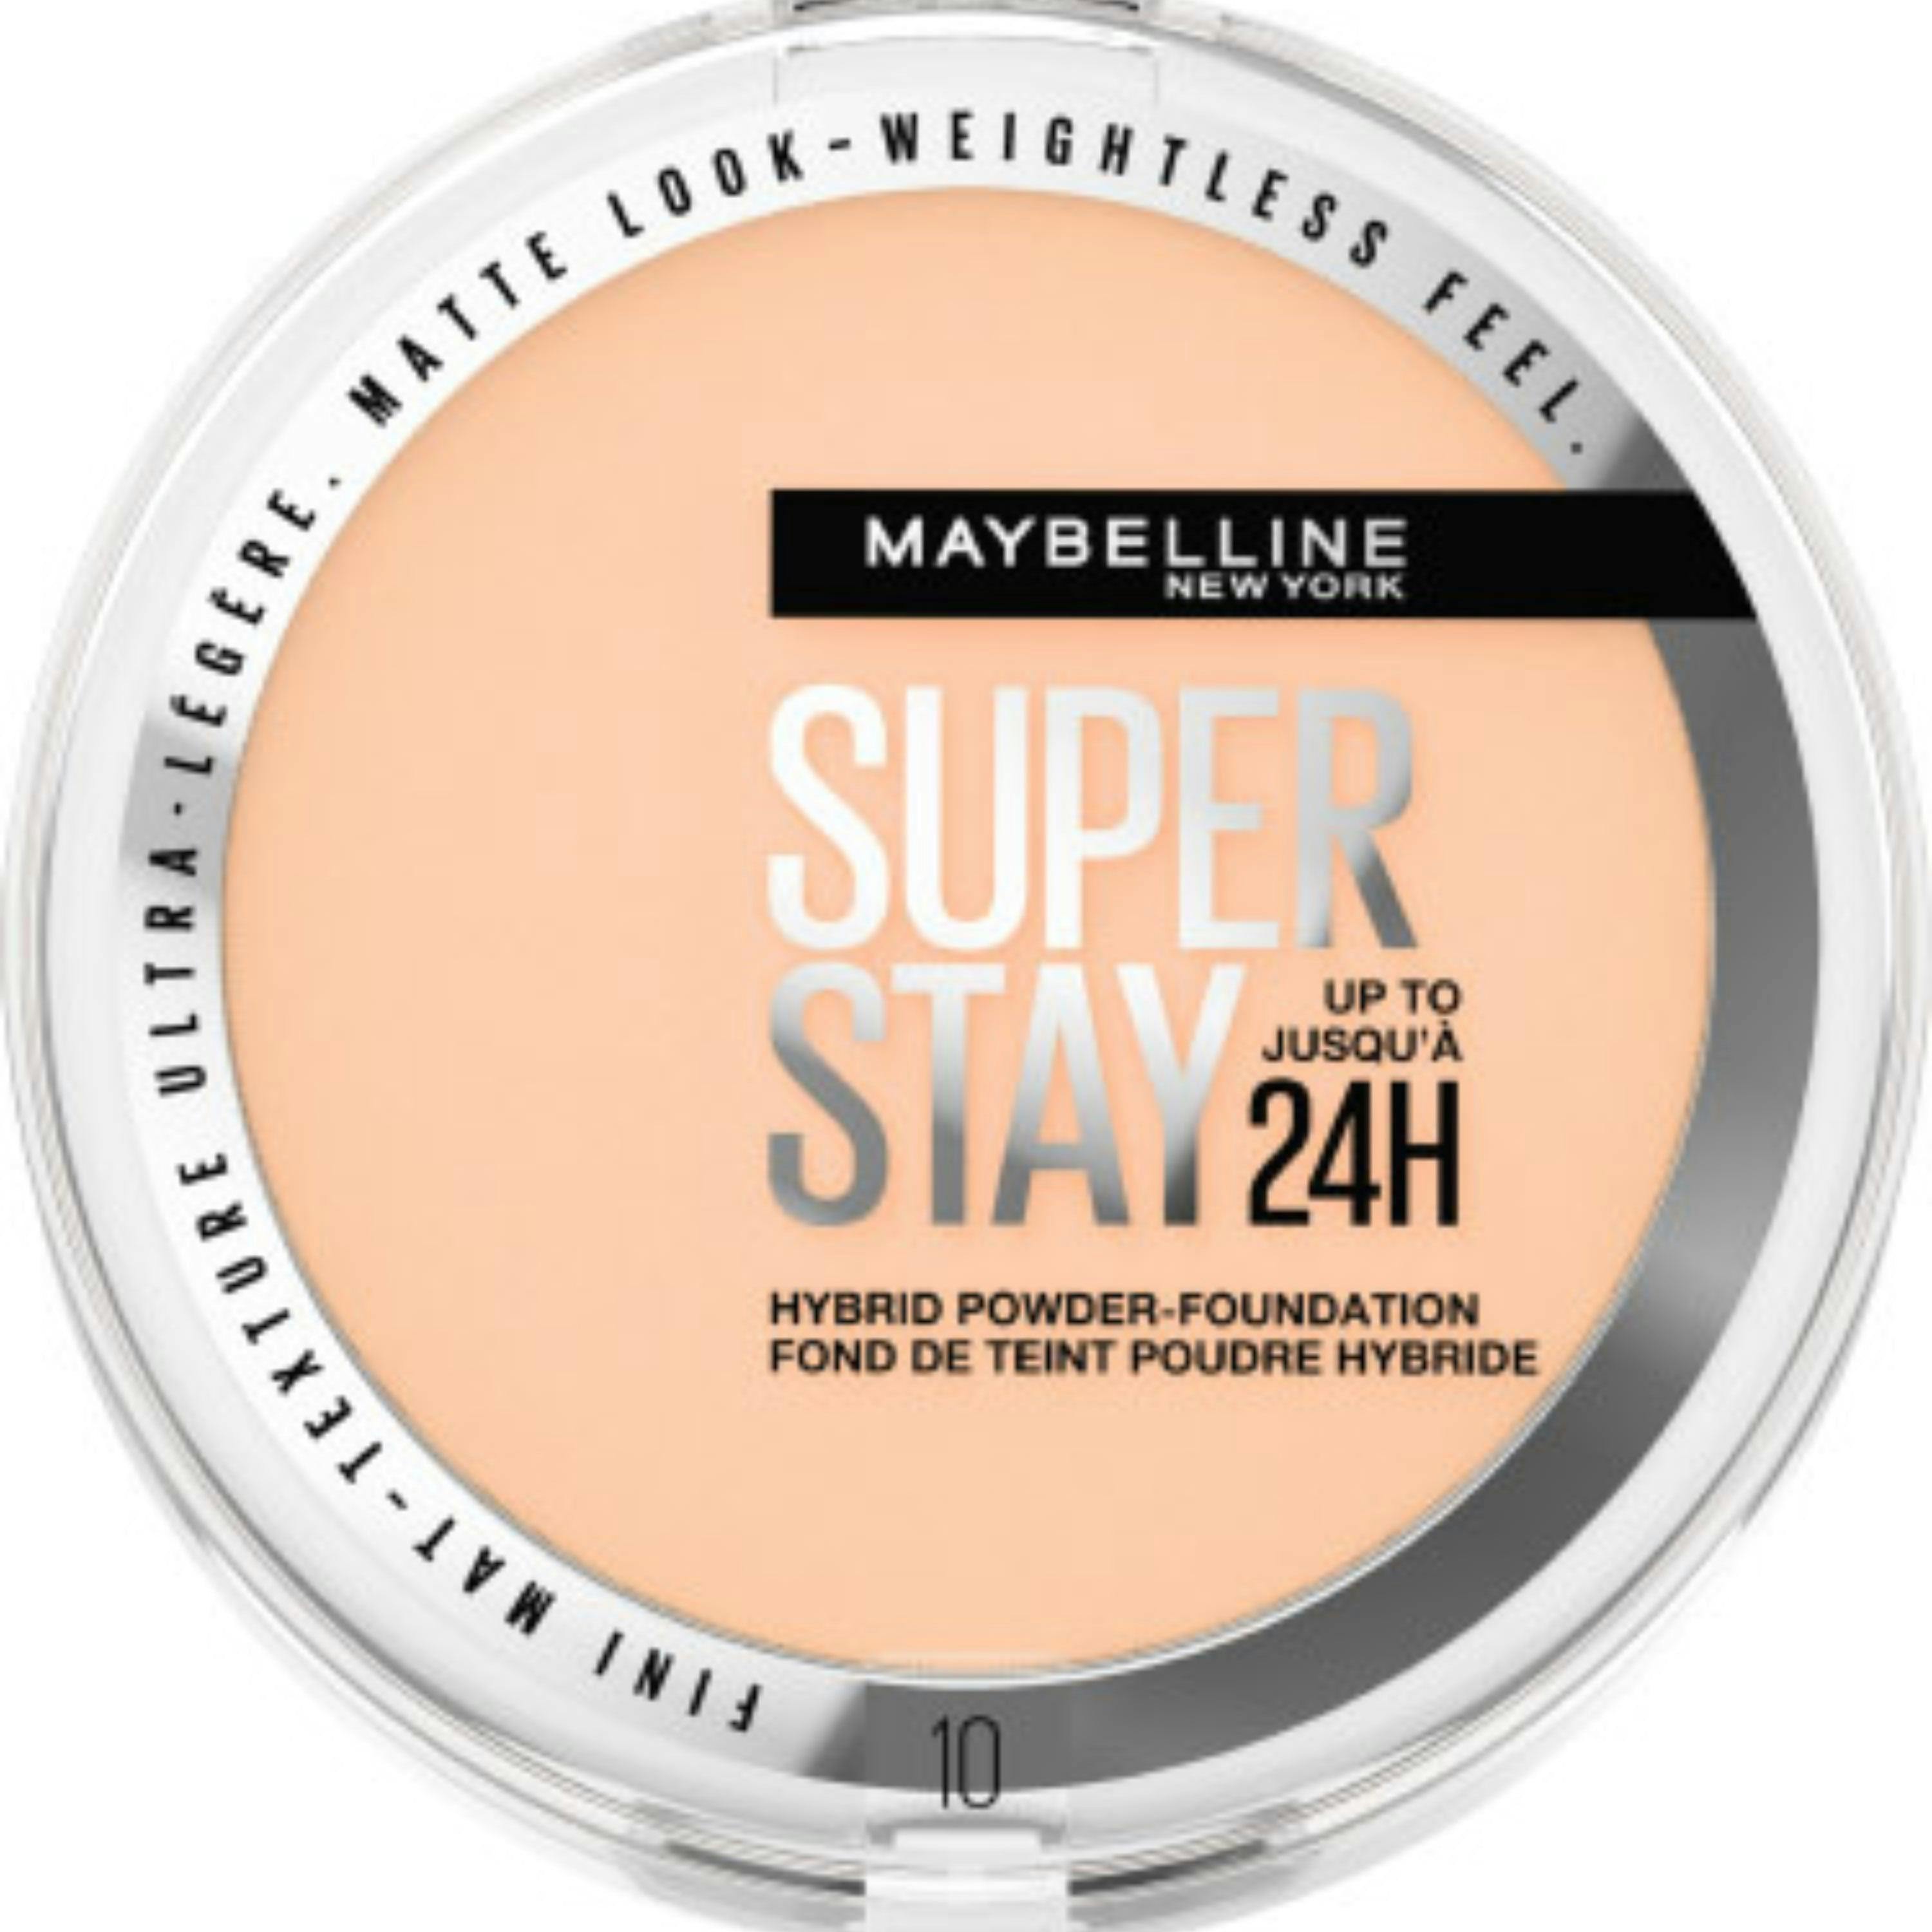 Maybelline Superstay 24H Hybrid Powder Foundation 9g